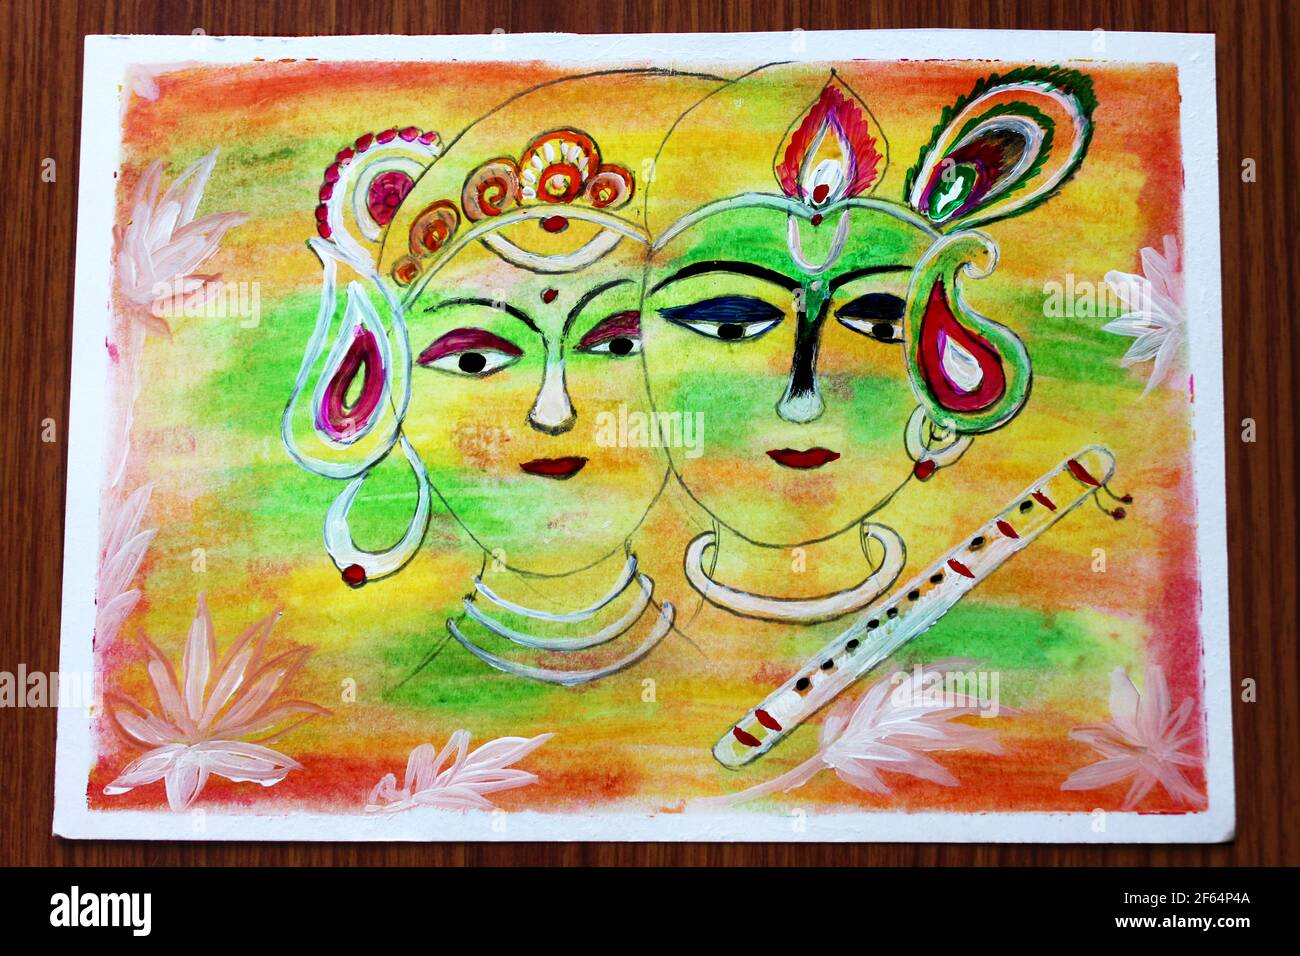 Indian God Radha krishna Holi festival abstract painting Art ...